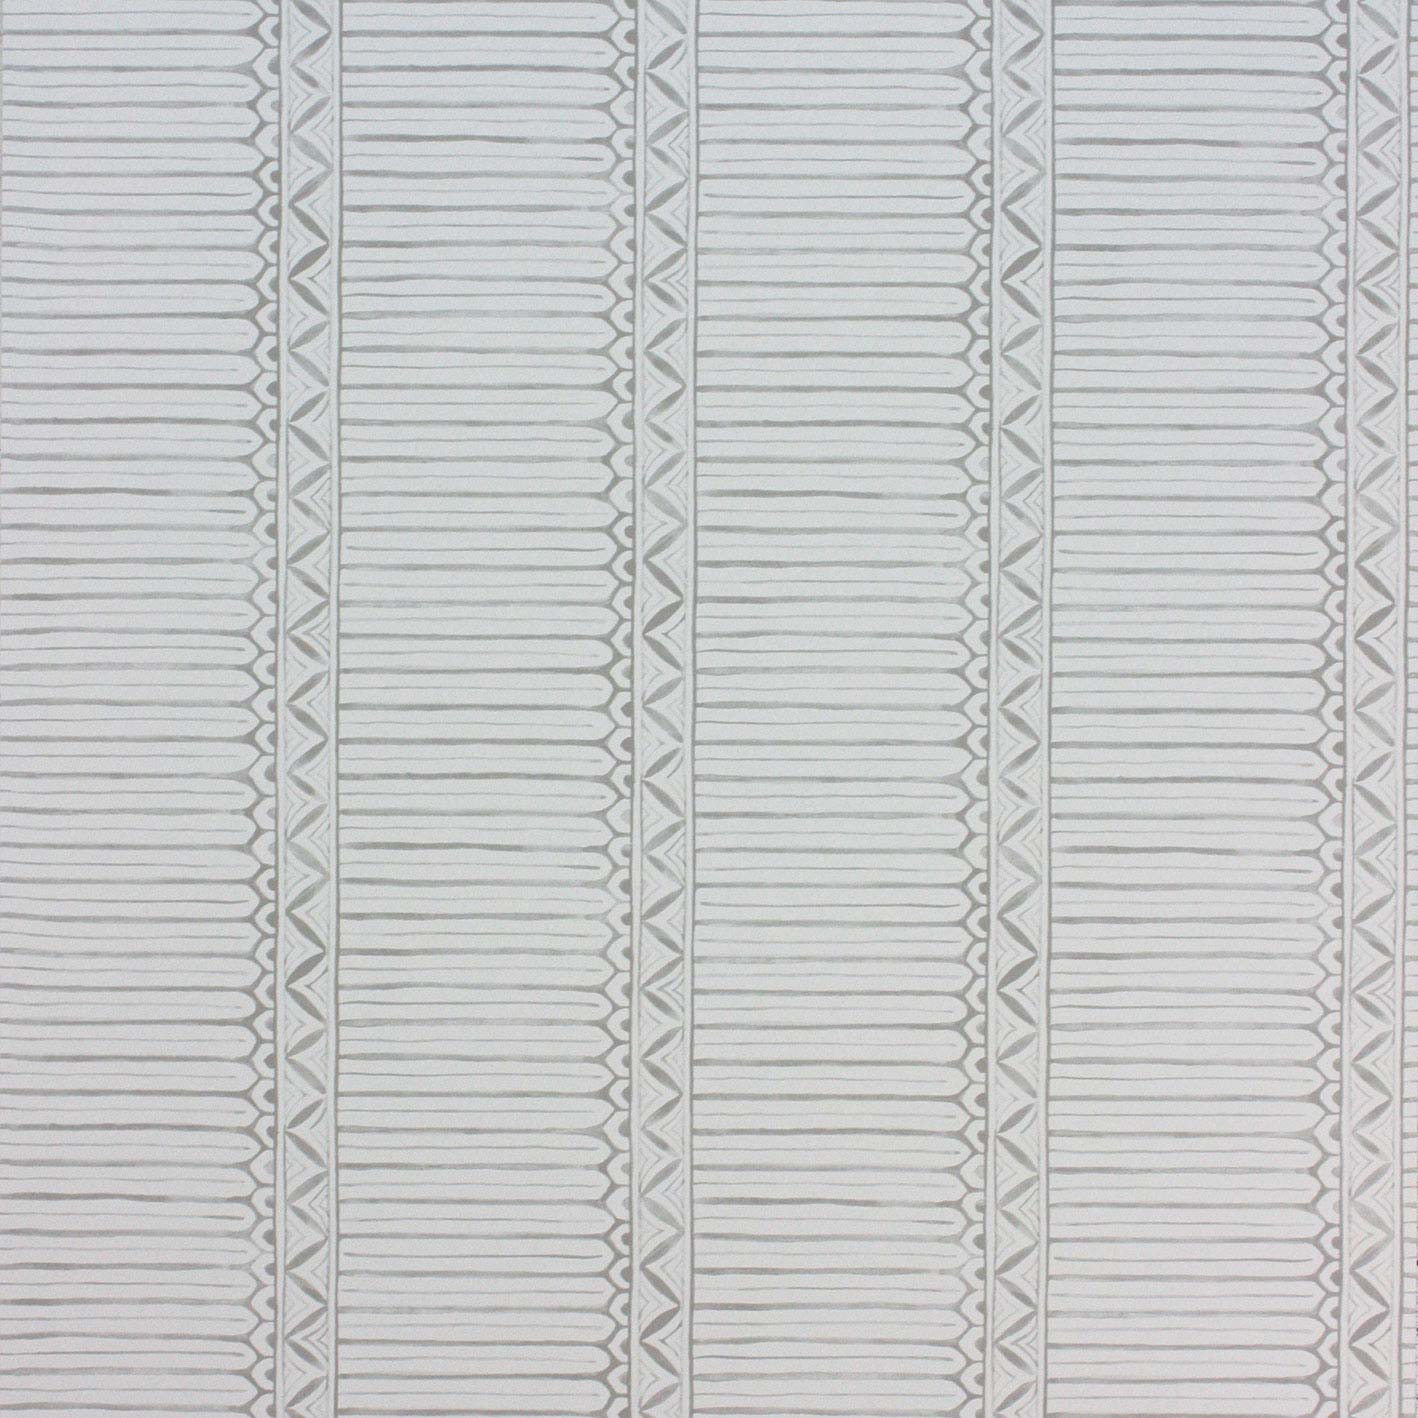 Nina Campbell Wallpaper - Les Rêves Domiers Grey/Ivory NCW4307-02